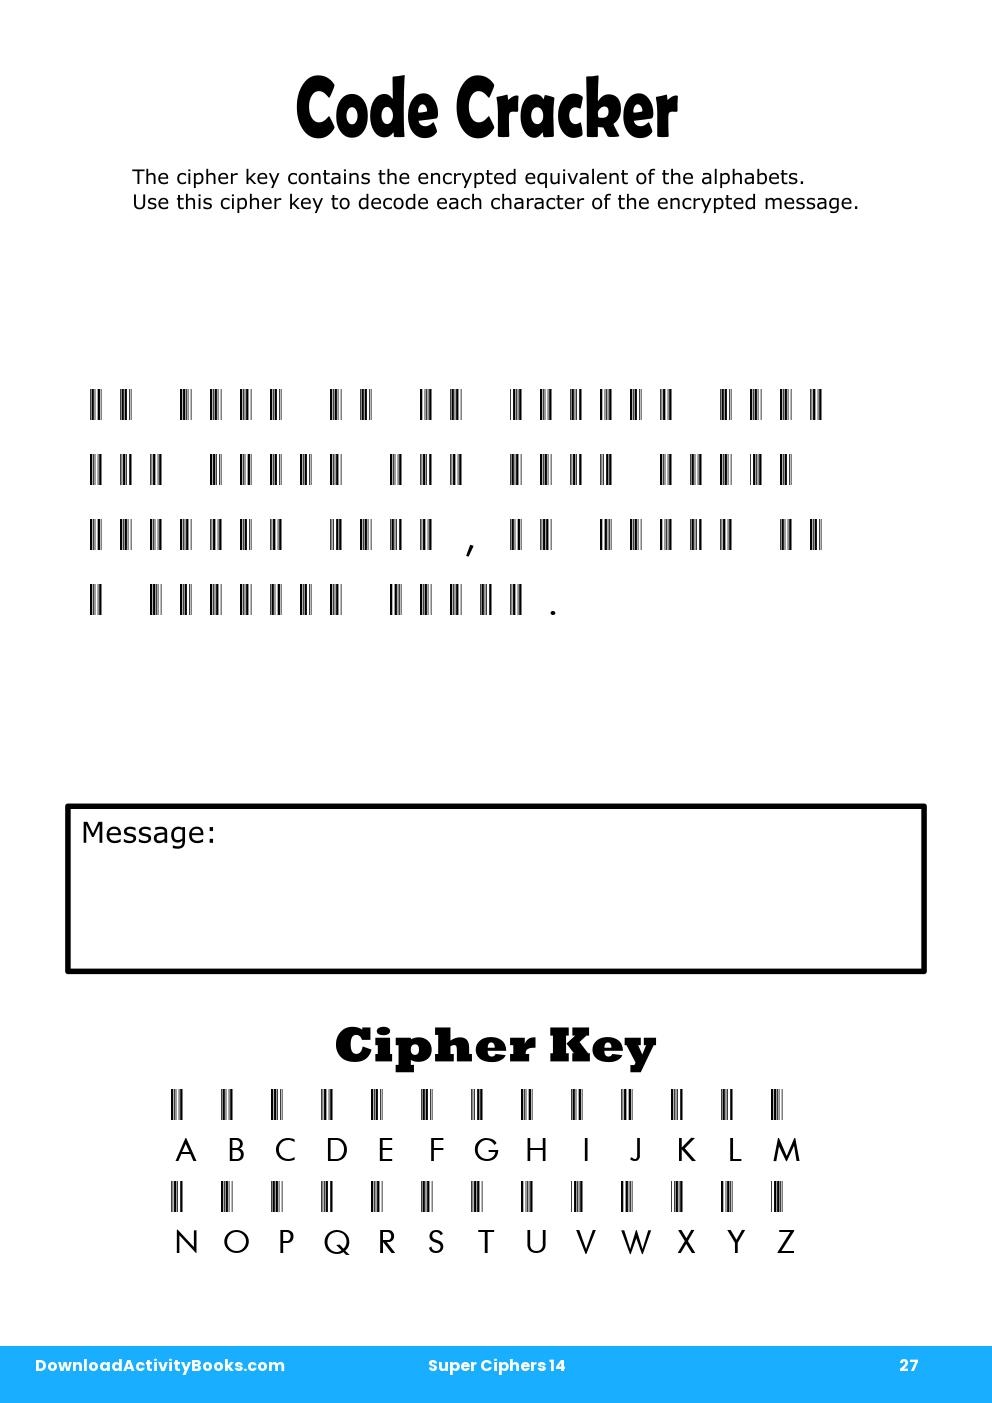 Code Cracker in Super Ciphers 14